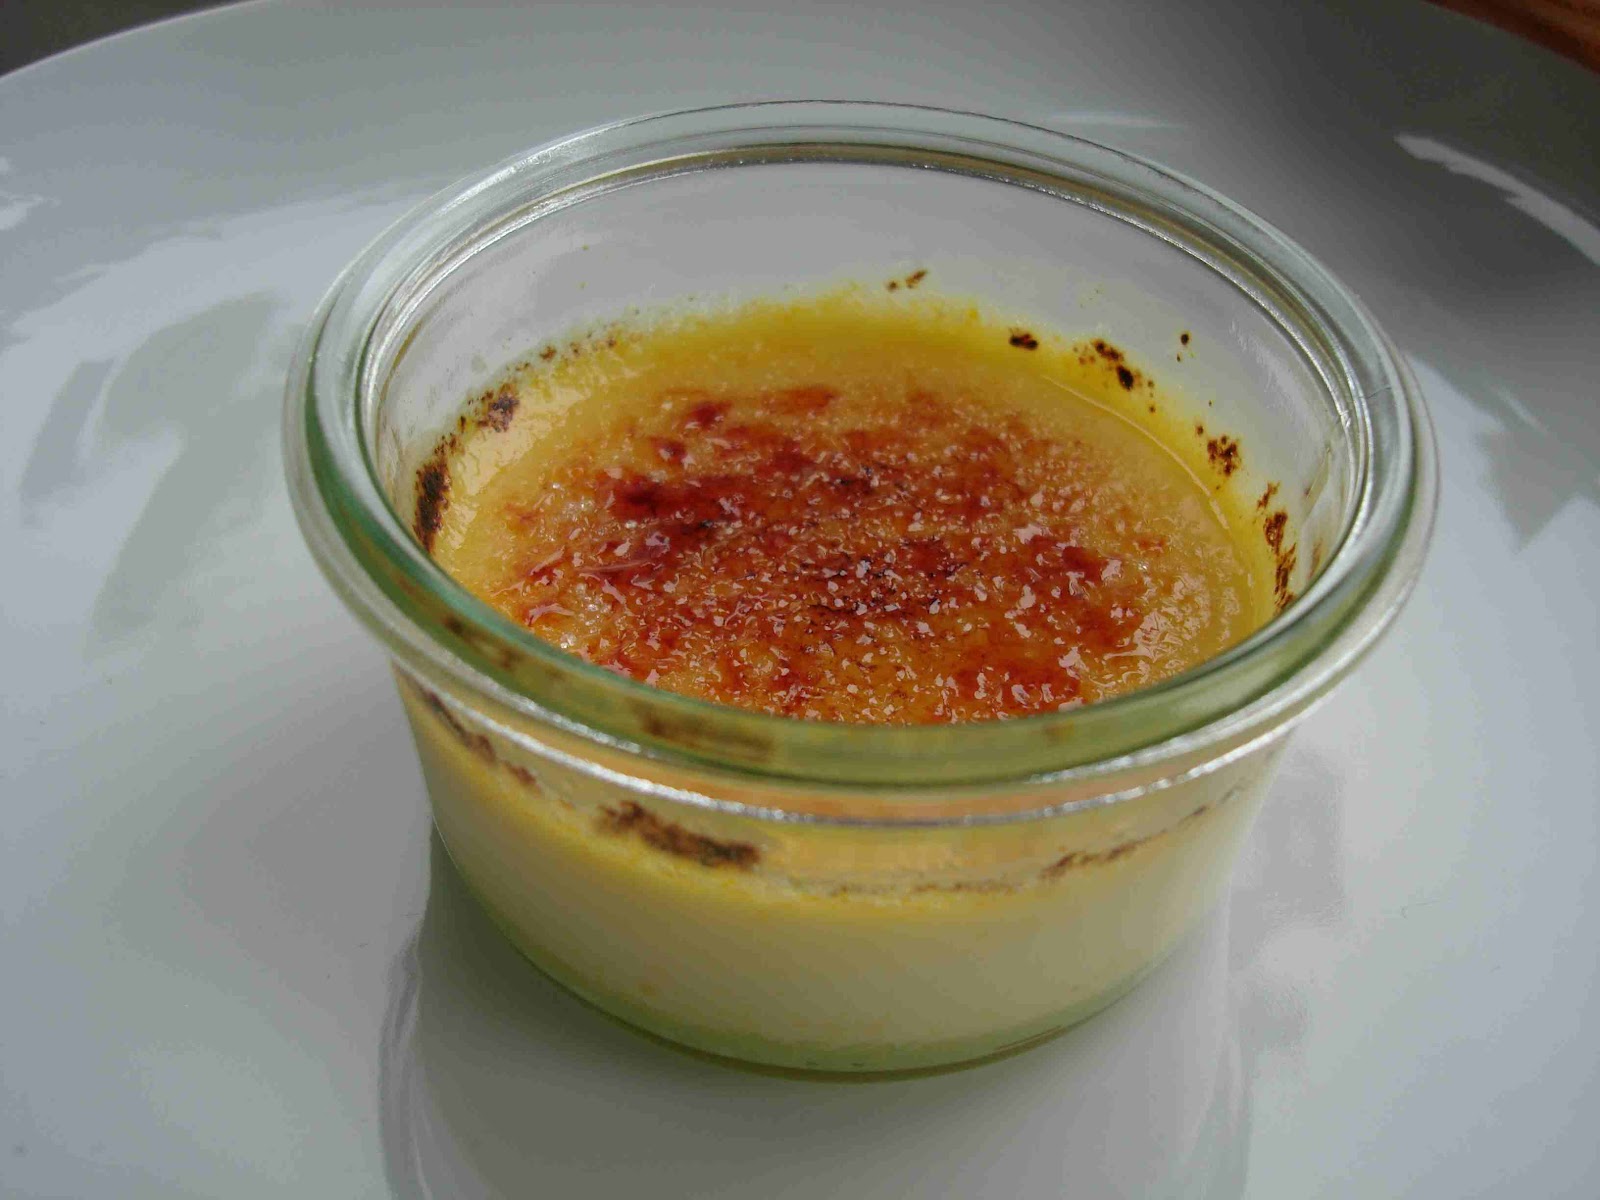 bushcooks kitchen: Mandarinen-Crème brûlée